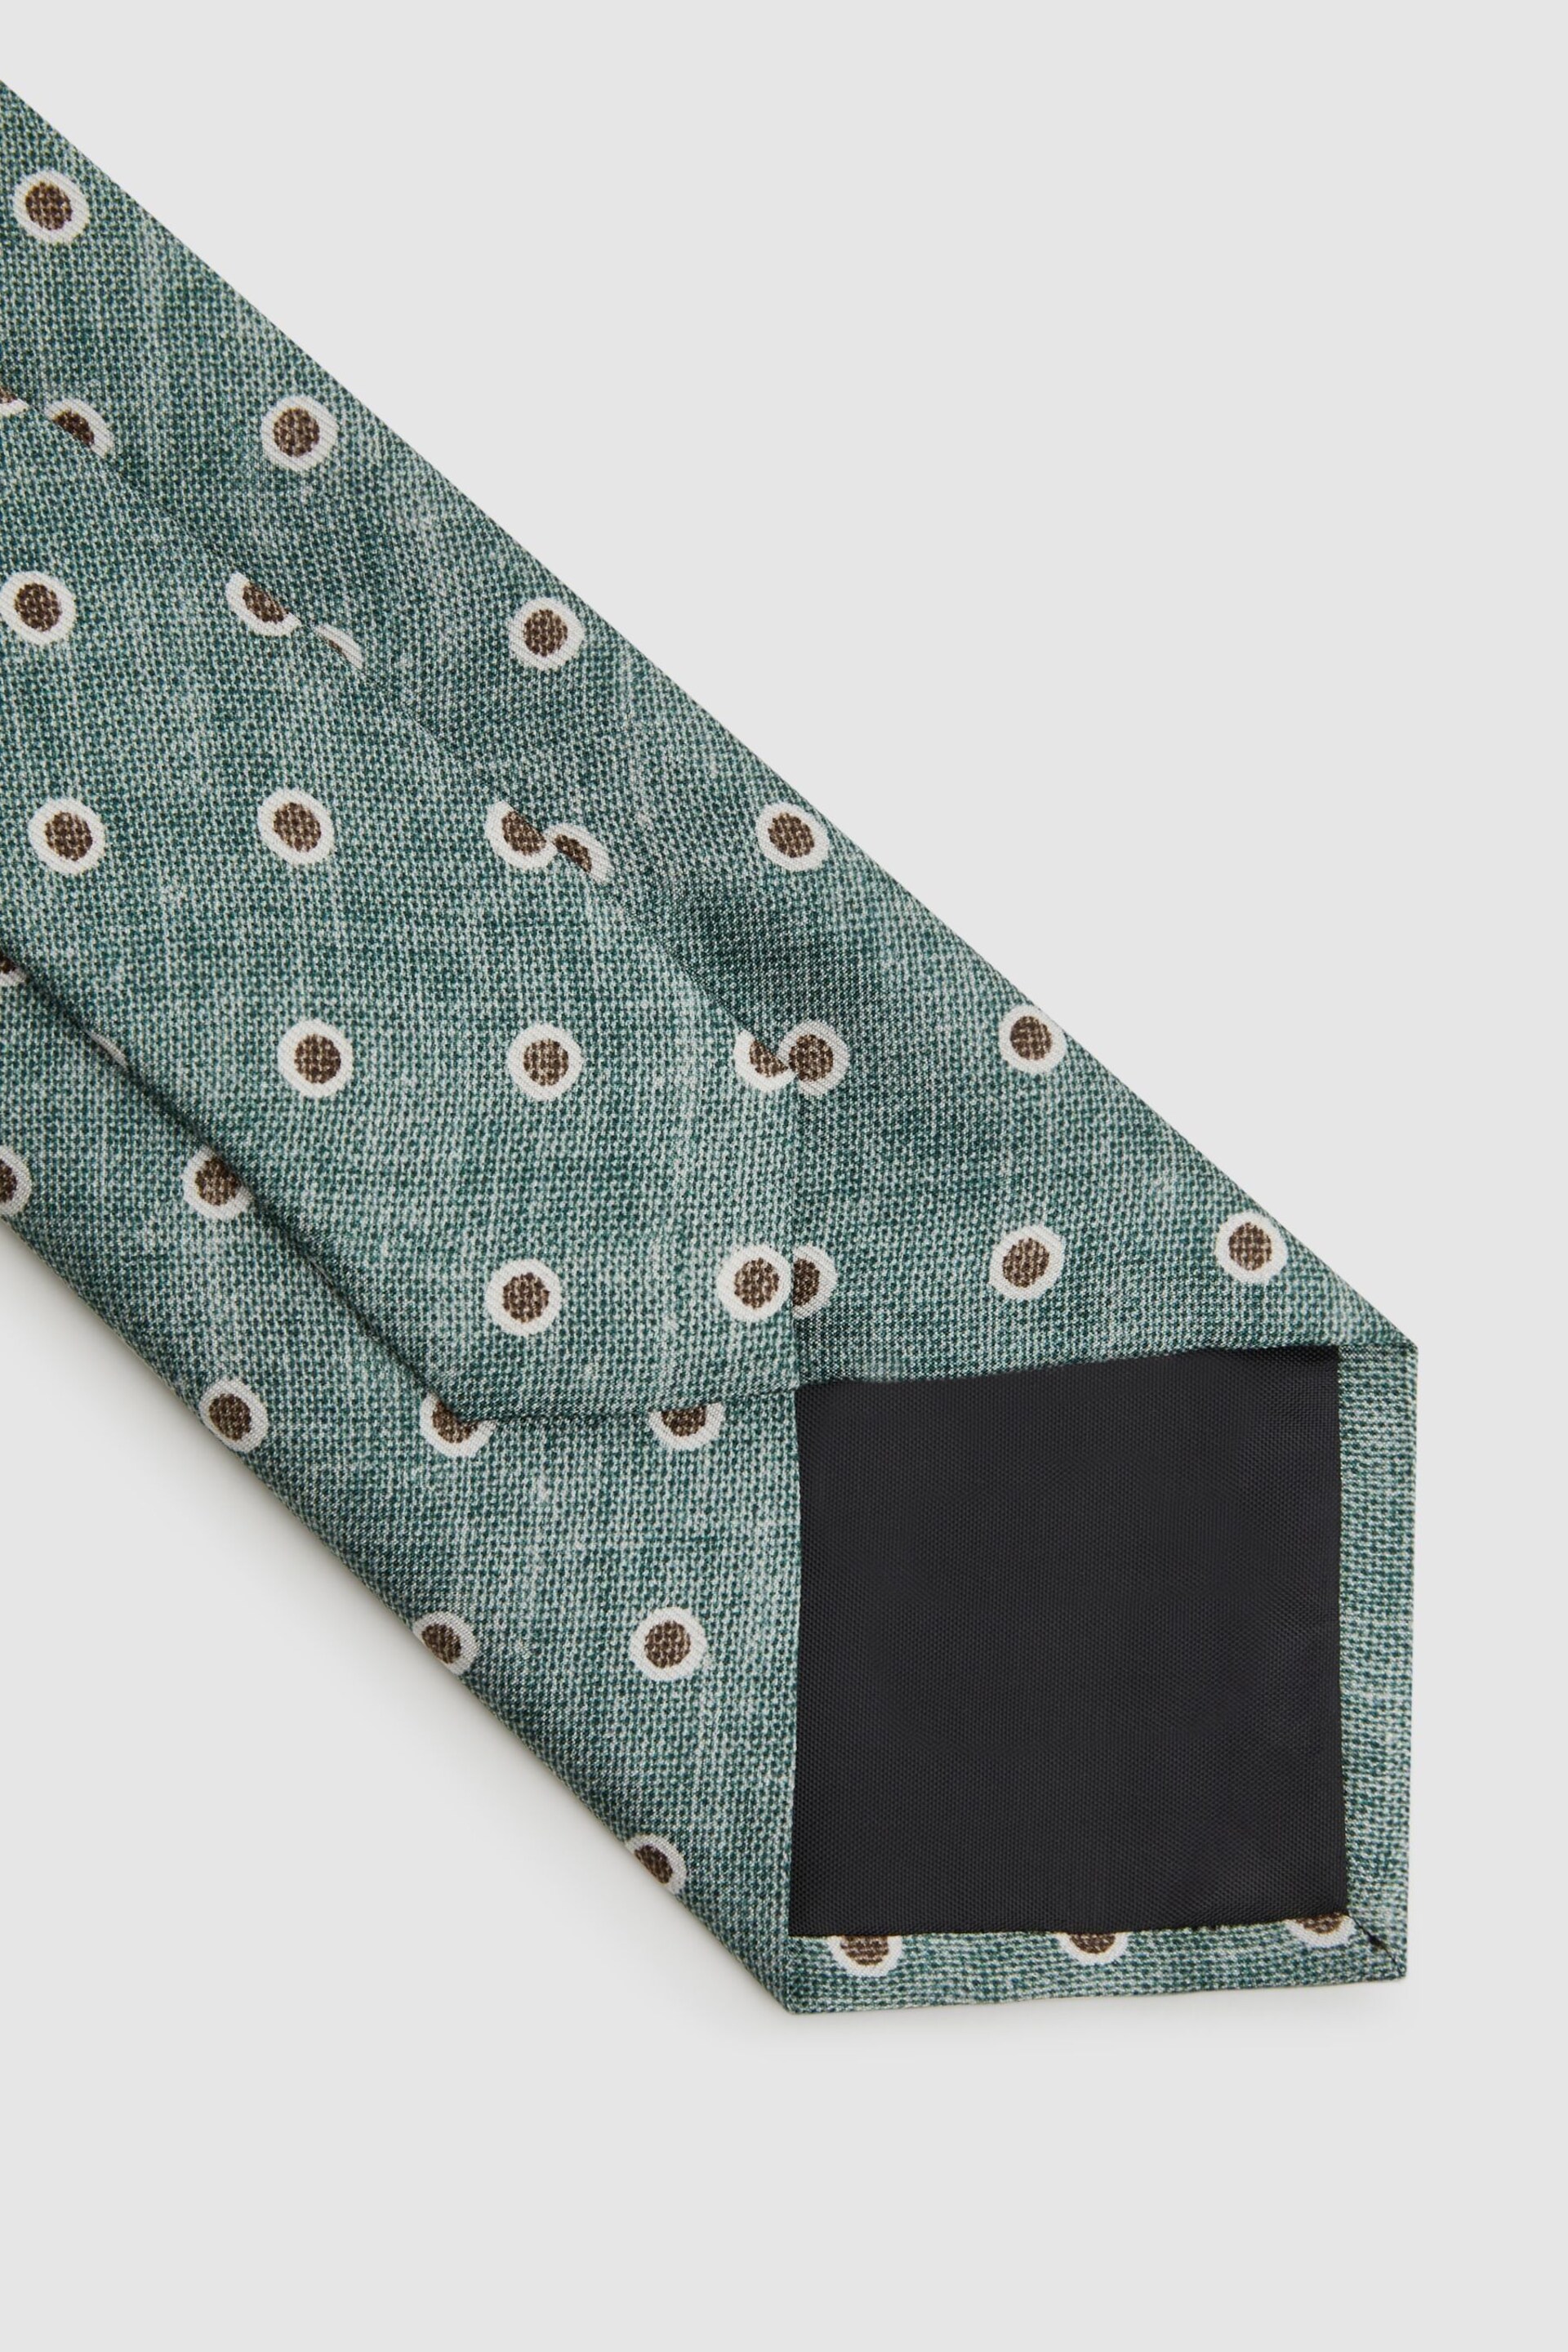 Reiss Sea Green Melange Porto Silk Polka Dot Print Tie - Image 4 of 5